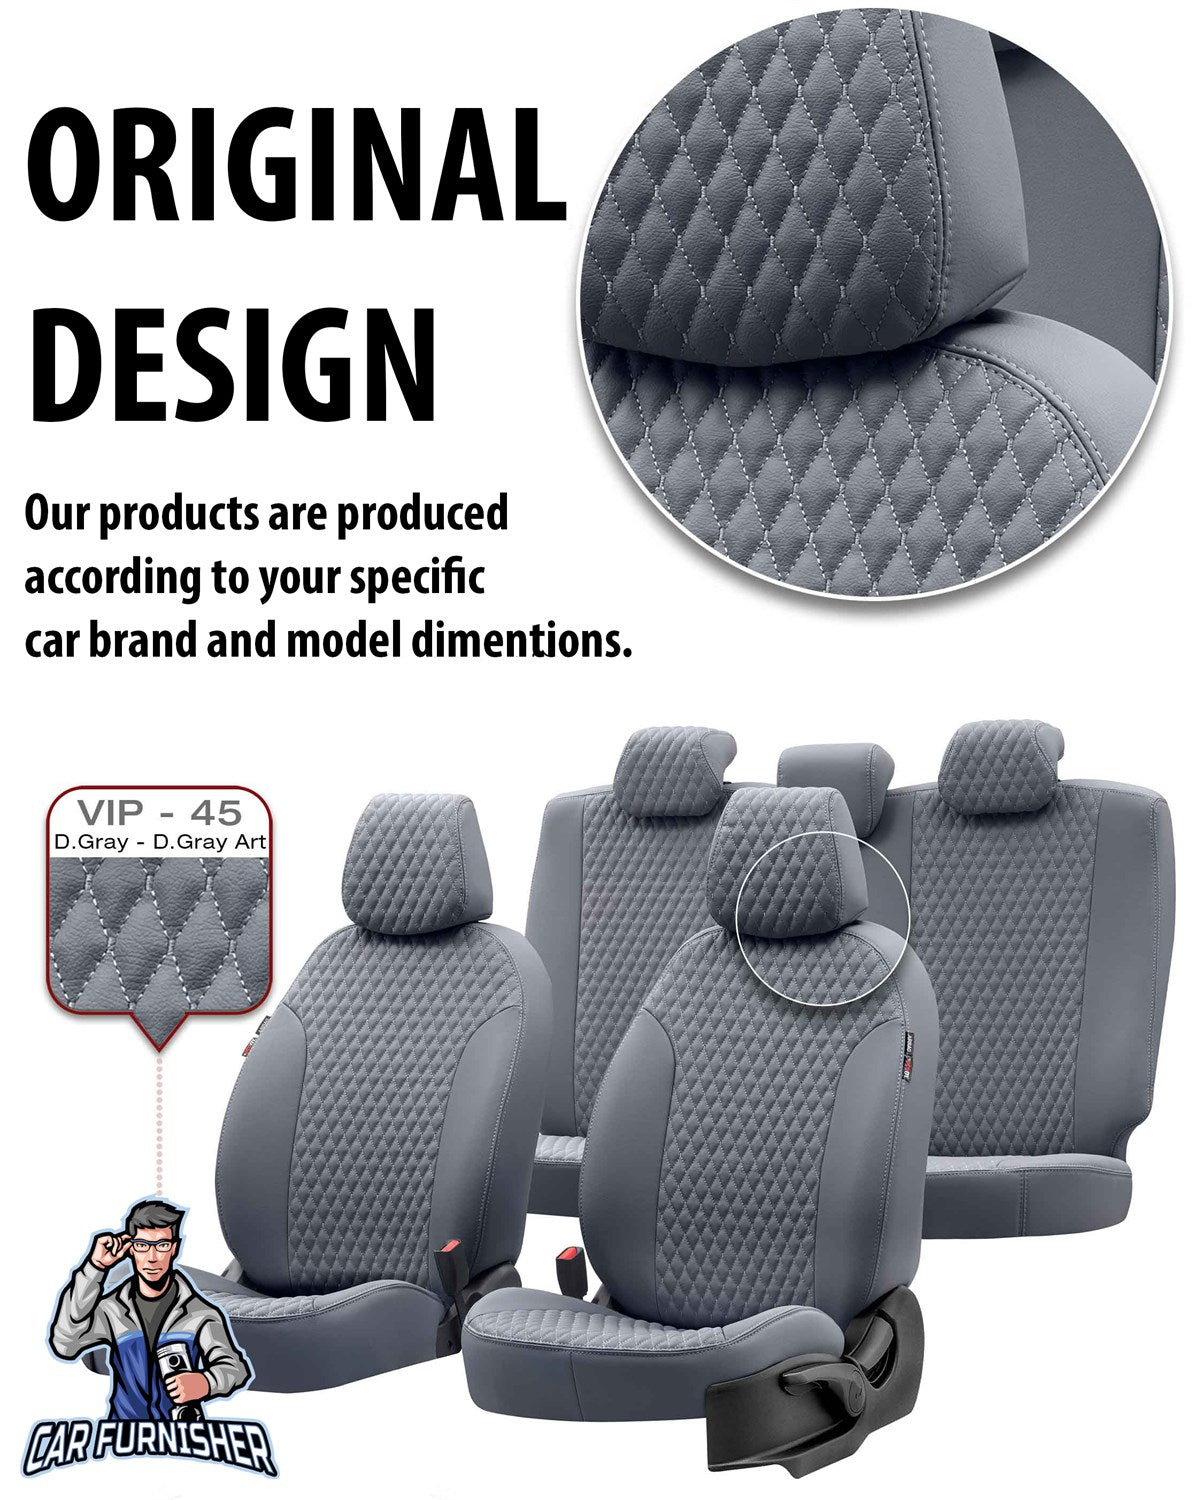 Opel Mokka Seat Covers Amsterdam Leather Design Black Leather